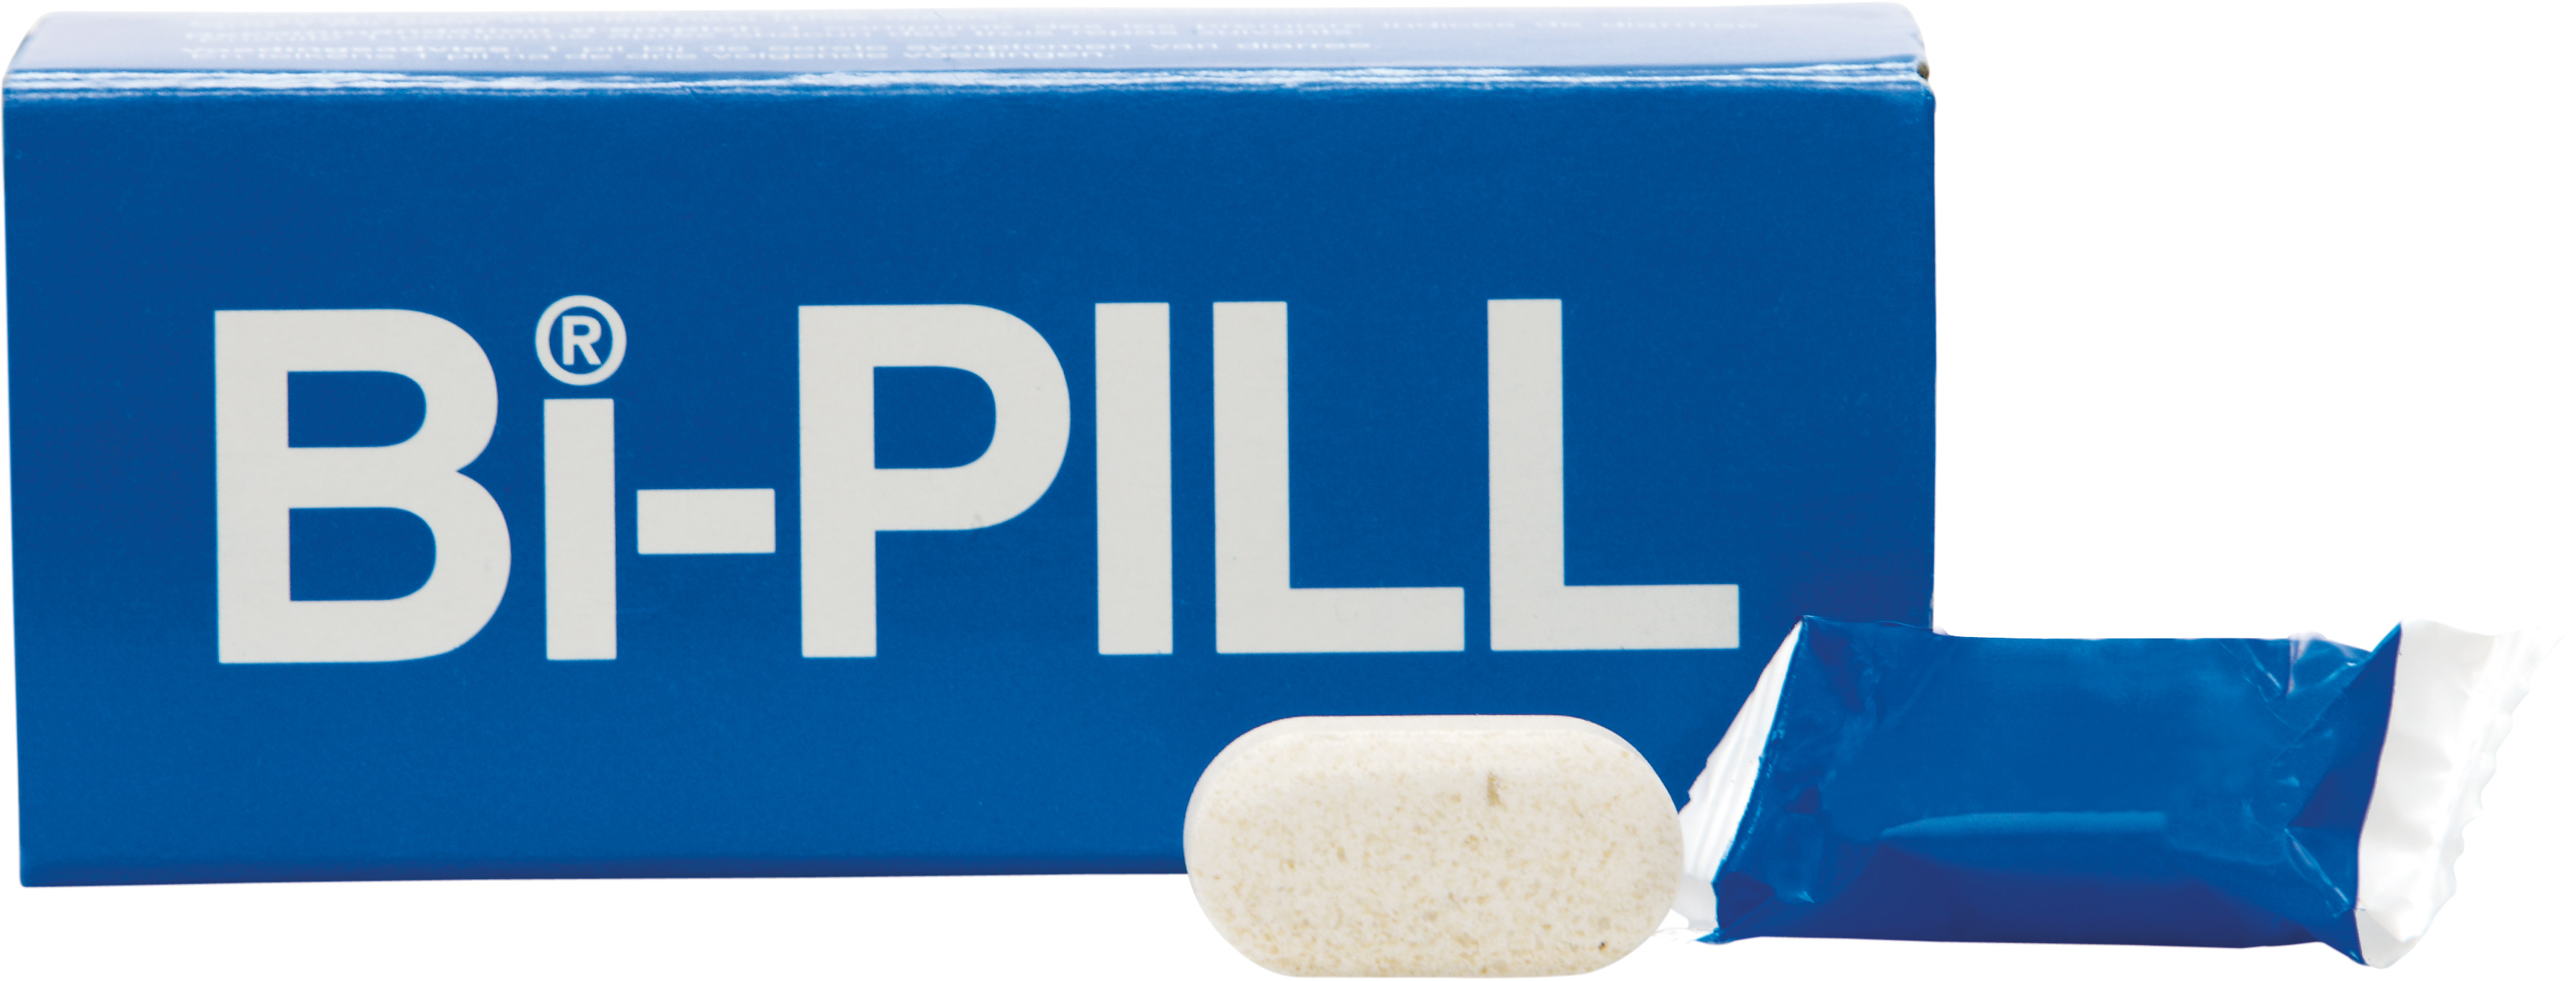 Bi-PILL Bicarbonat Pille für Kälber